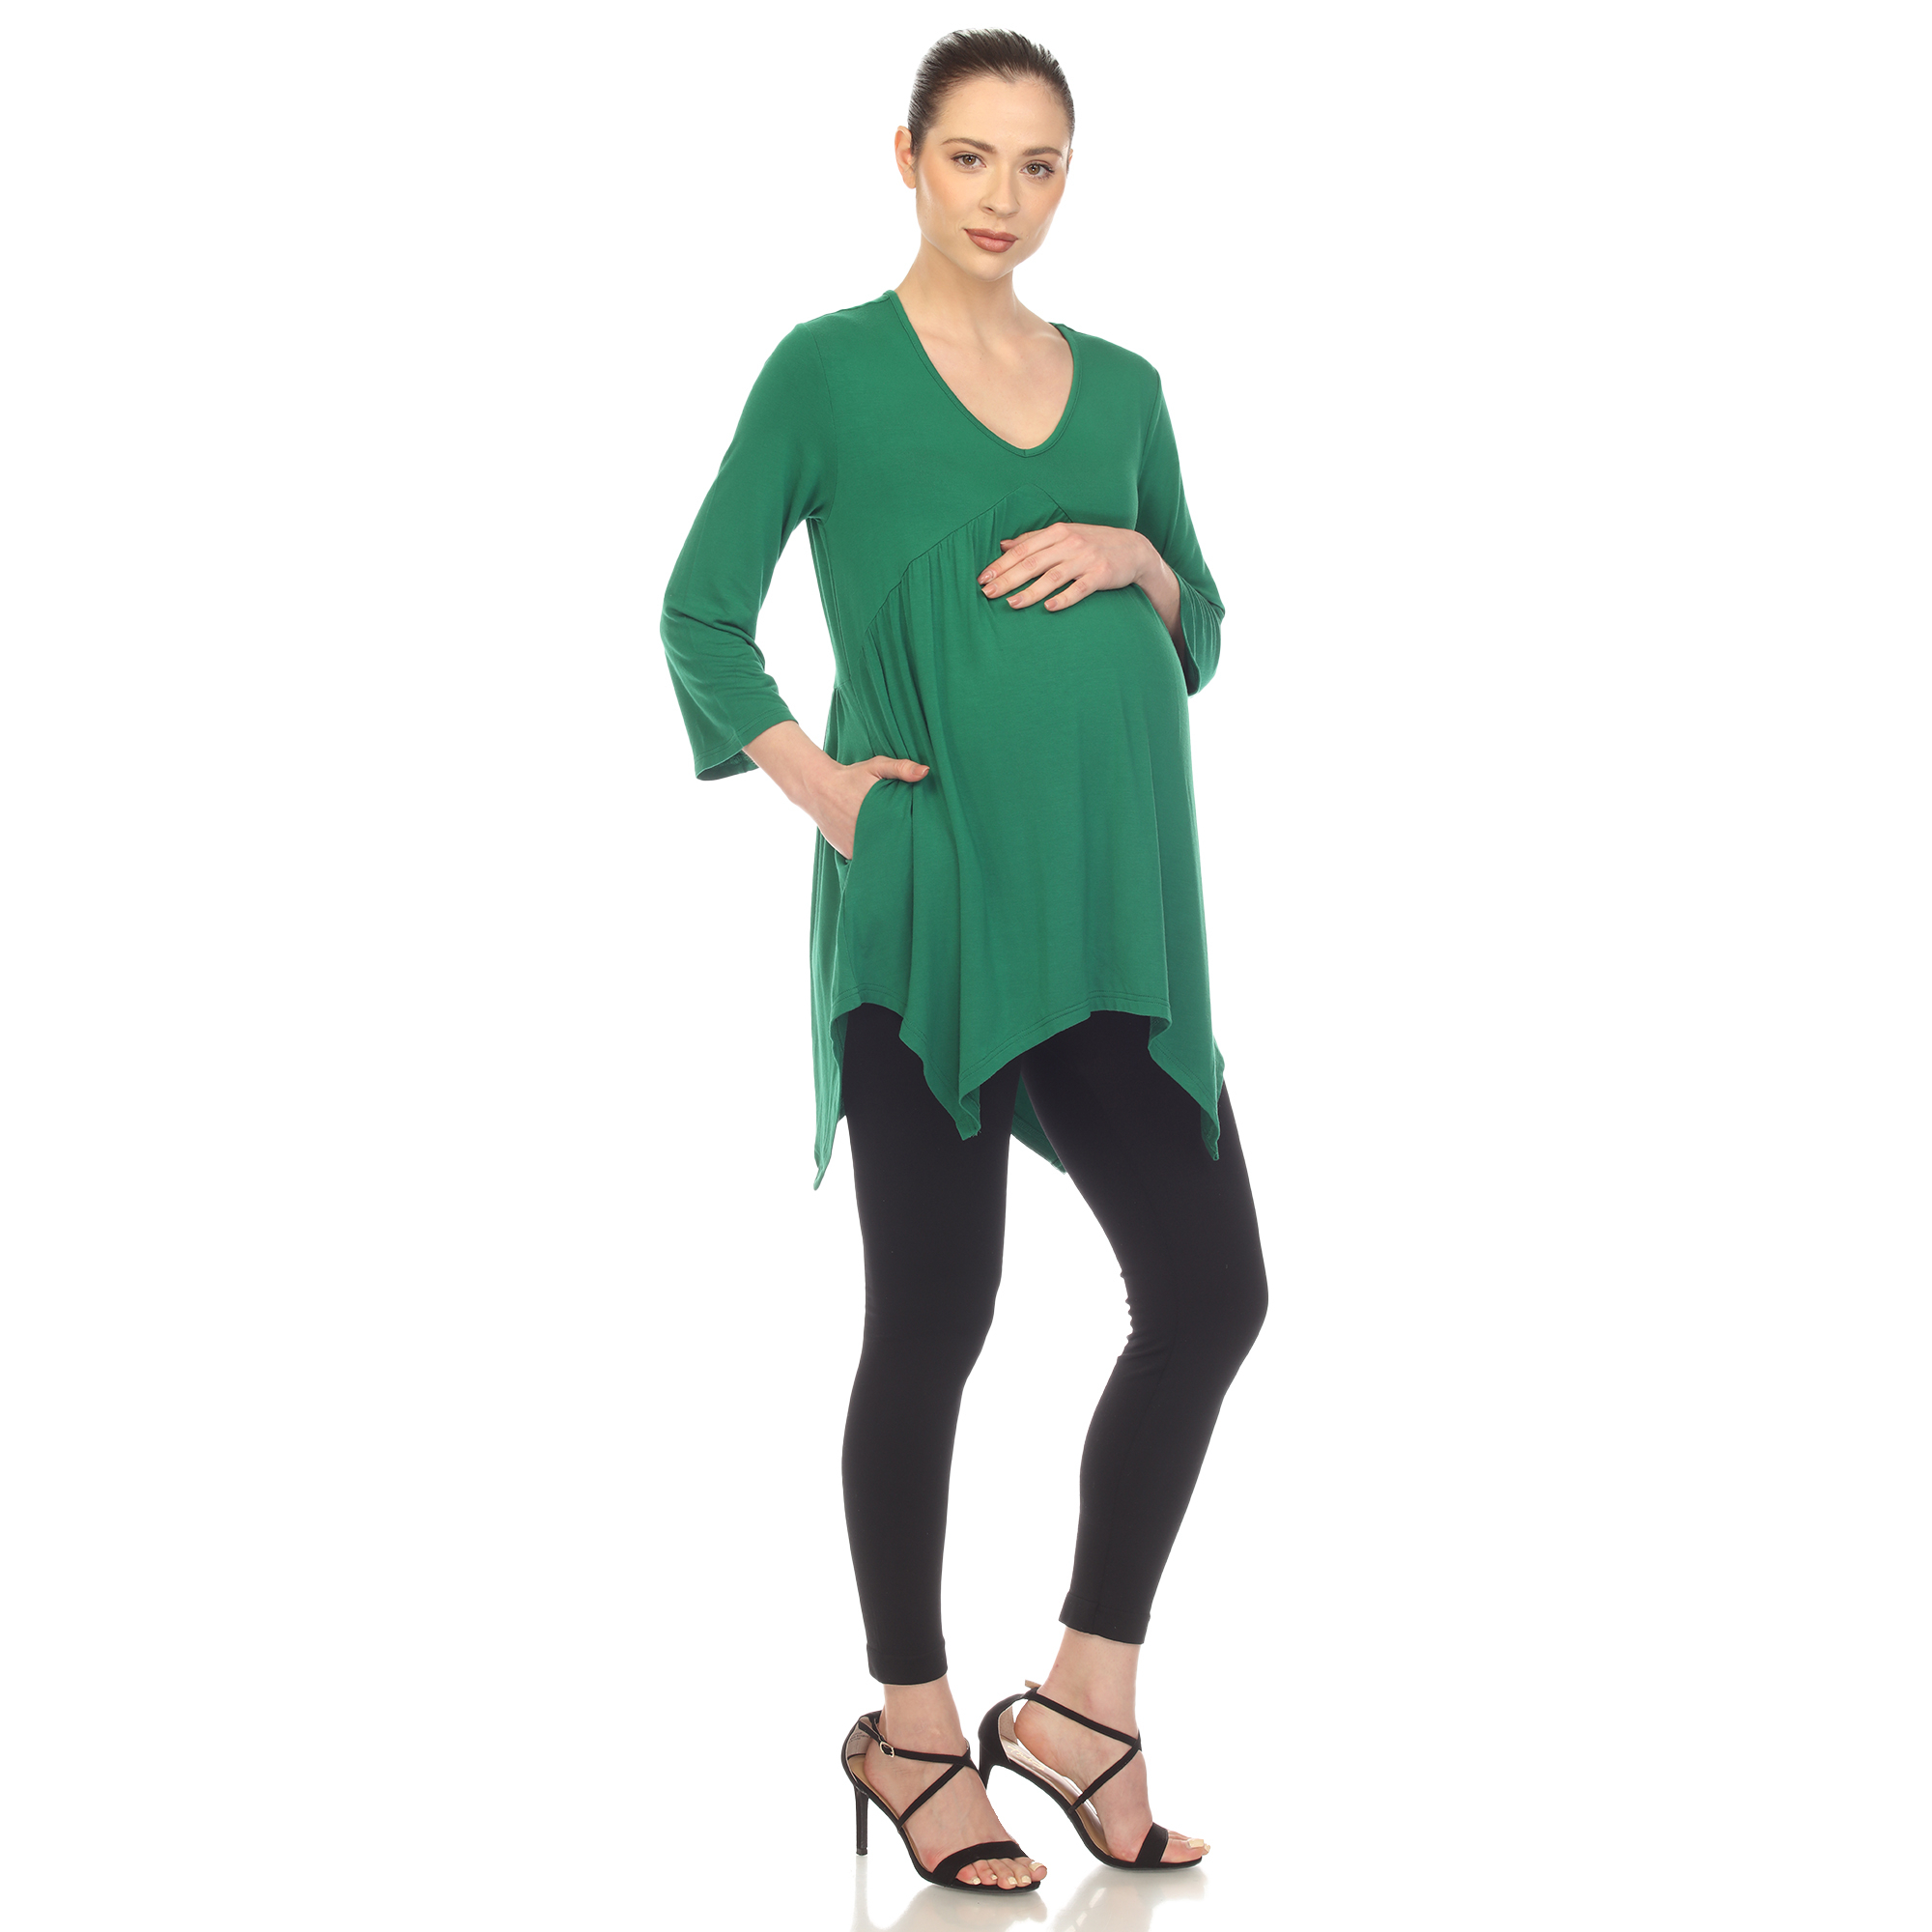 White Mark Women's Maternity Empire Waist V-Neck Tunic Top - Green, X-Large